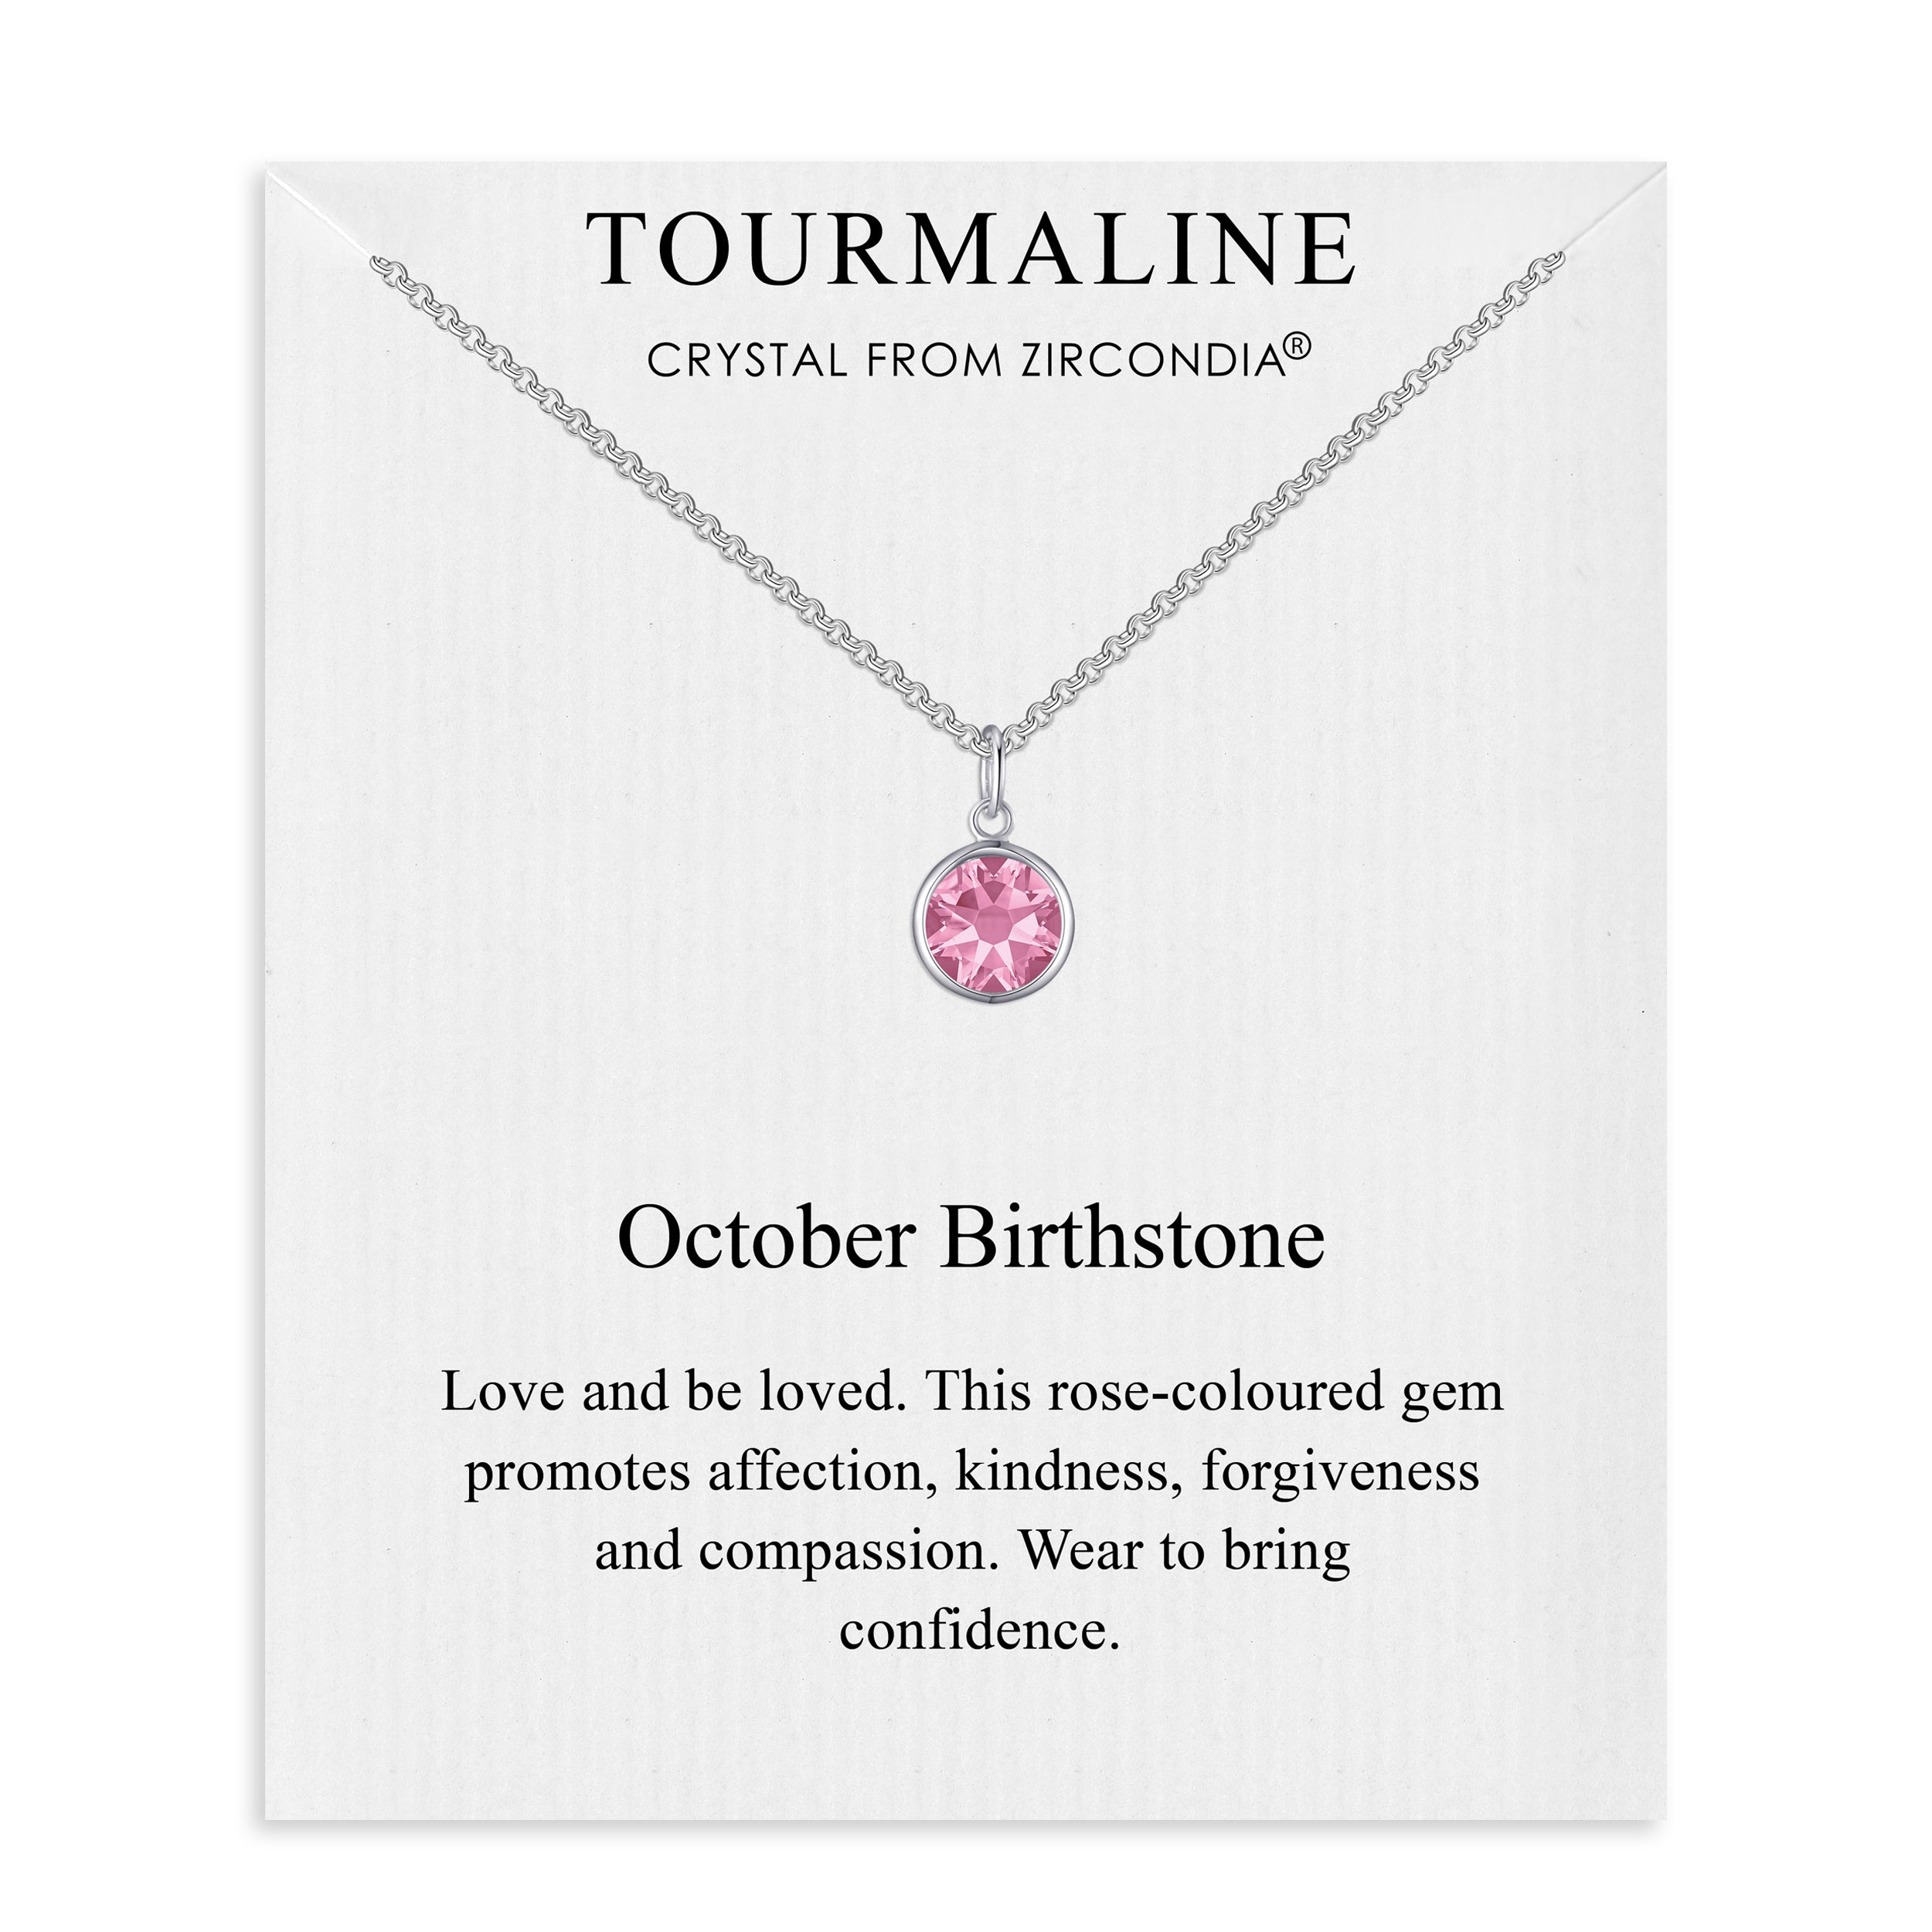 October (Tourmaline) Birthstone Necklace Created with Zircondia® Crystals by Philip Jones Jewellery